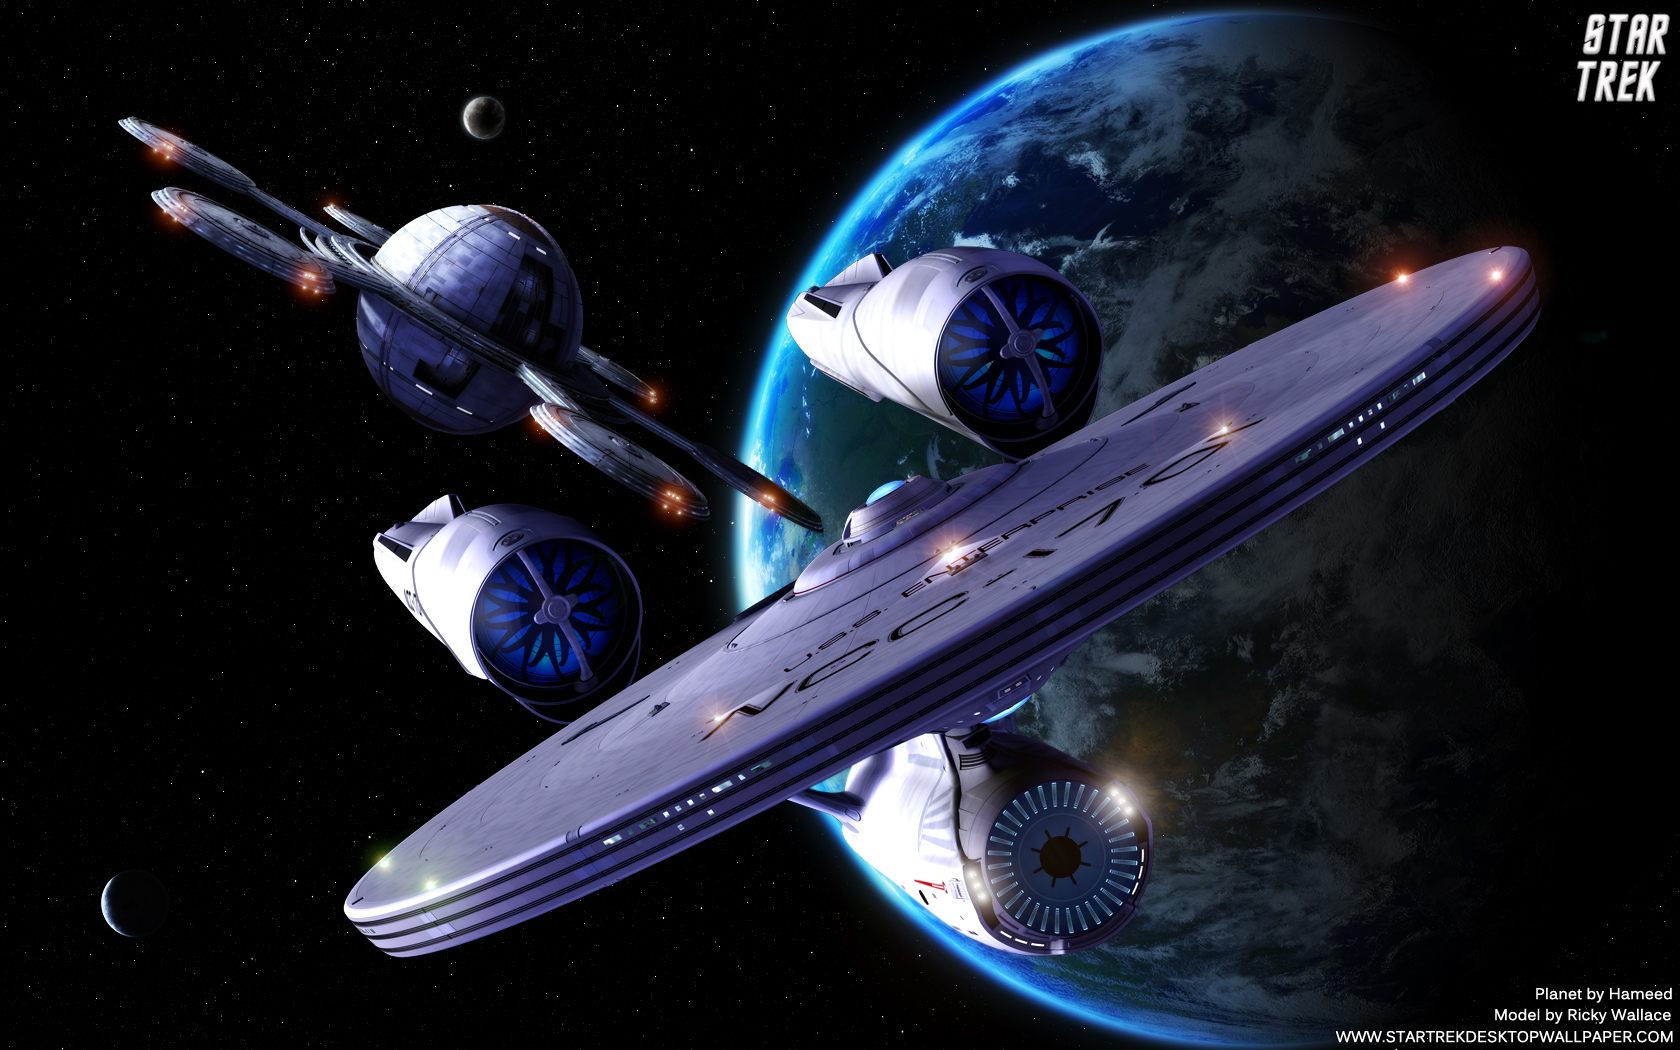 Starbase Star Trek Puter Desktop Wallpaper Pictures Image